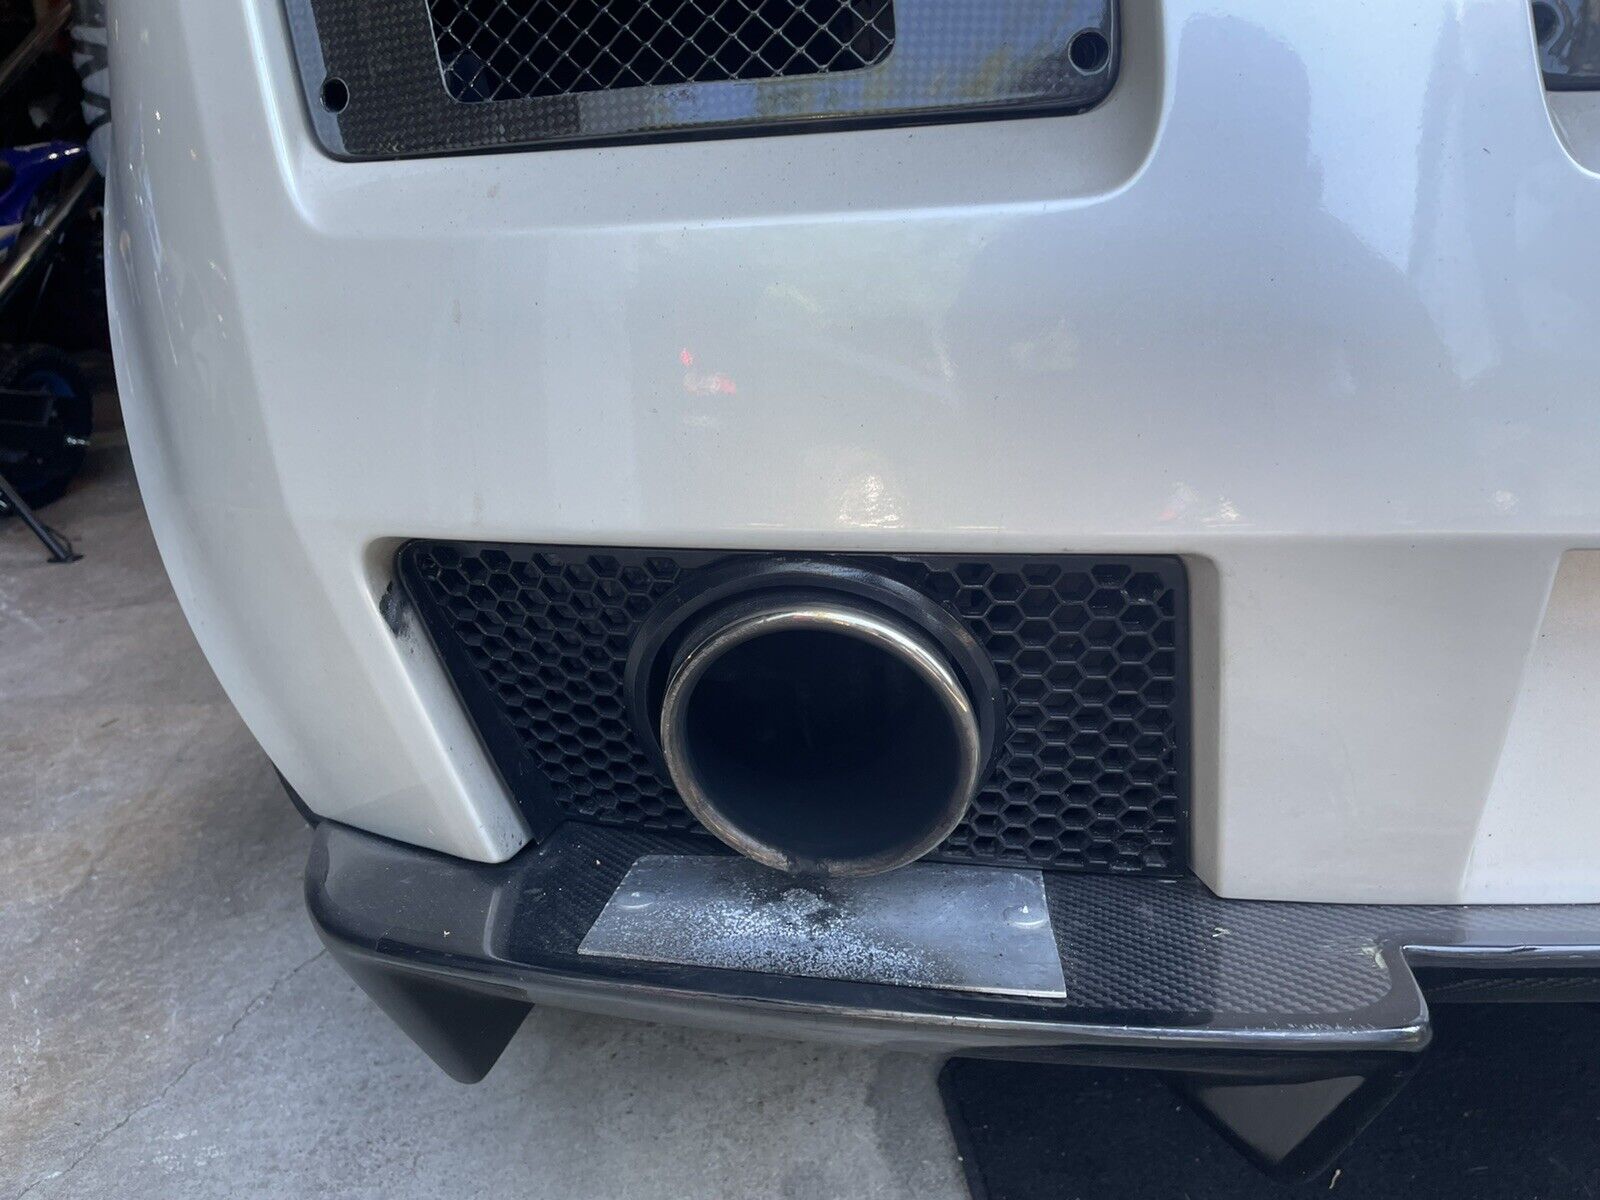 Lamborghini Gallardo exhaust tip and grill